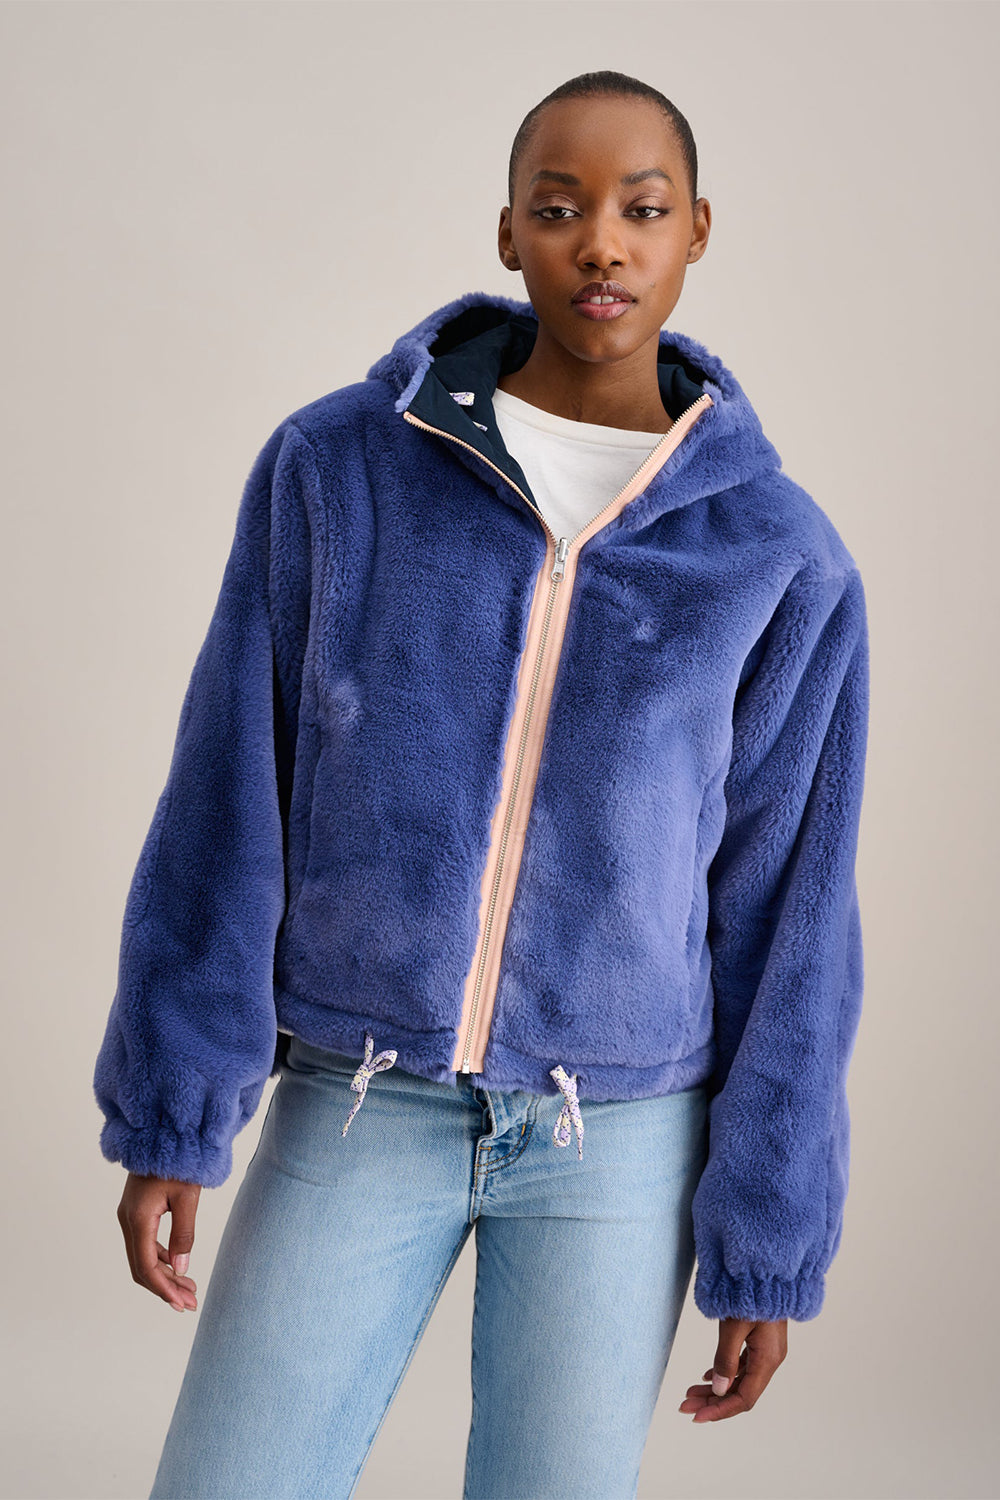 Womens jacket | Bellerose Loud jacket | The Standard Store